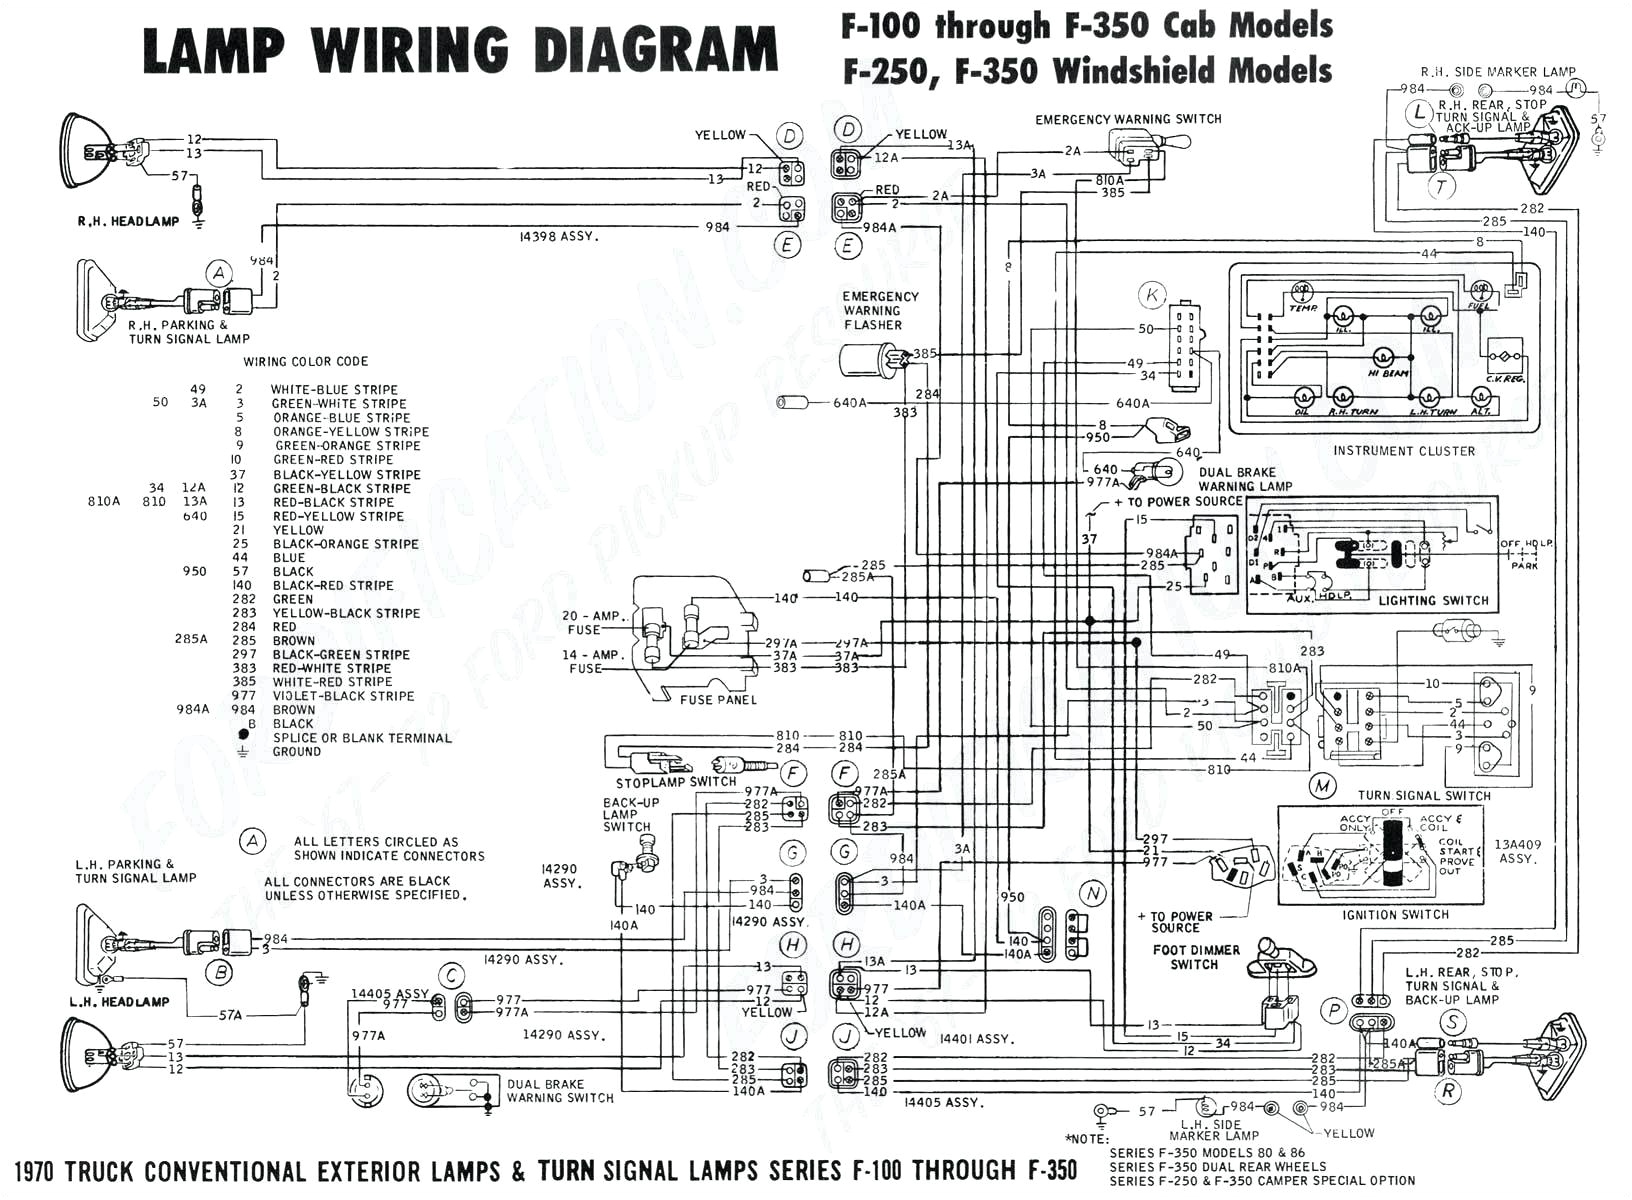 velvac mirror wiring diagram fuse box diagram ford truck enthusiasts forums autos weblog wire rh javastraat co velvac gas cap velvac rv mirror wiring diagram 2d jpg